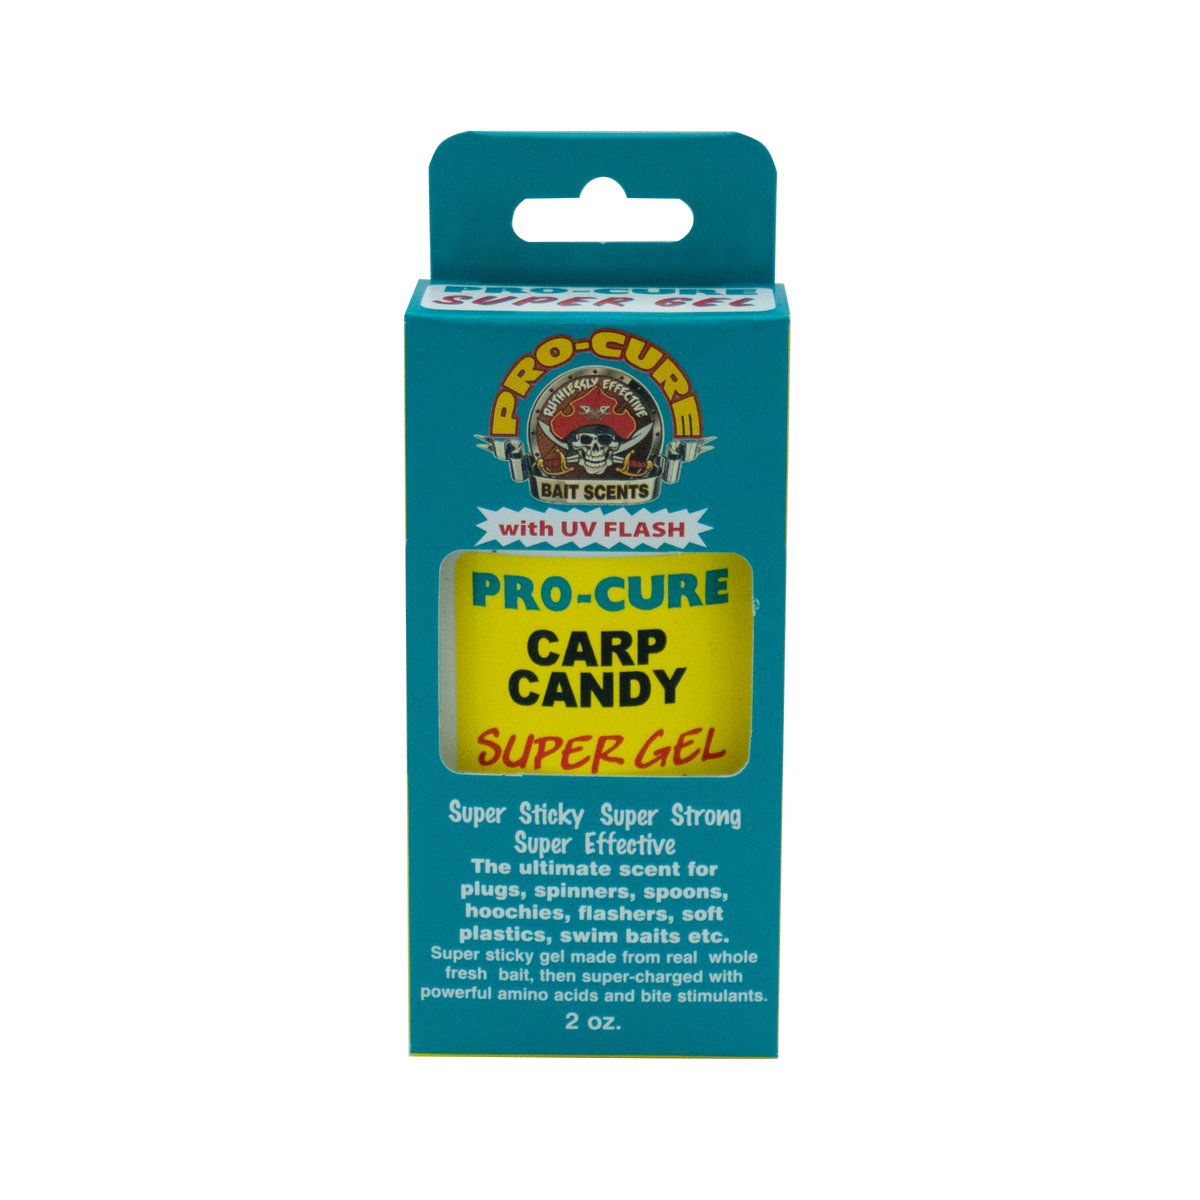 CARP CANDY SUPER GEL – Pro-Cure, Inc